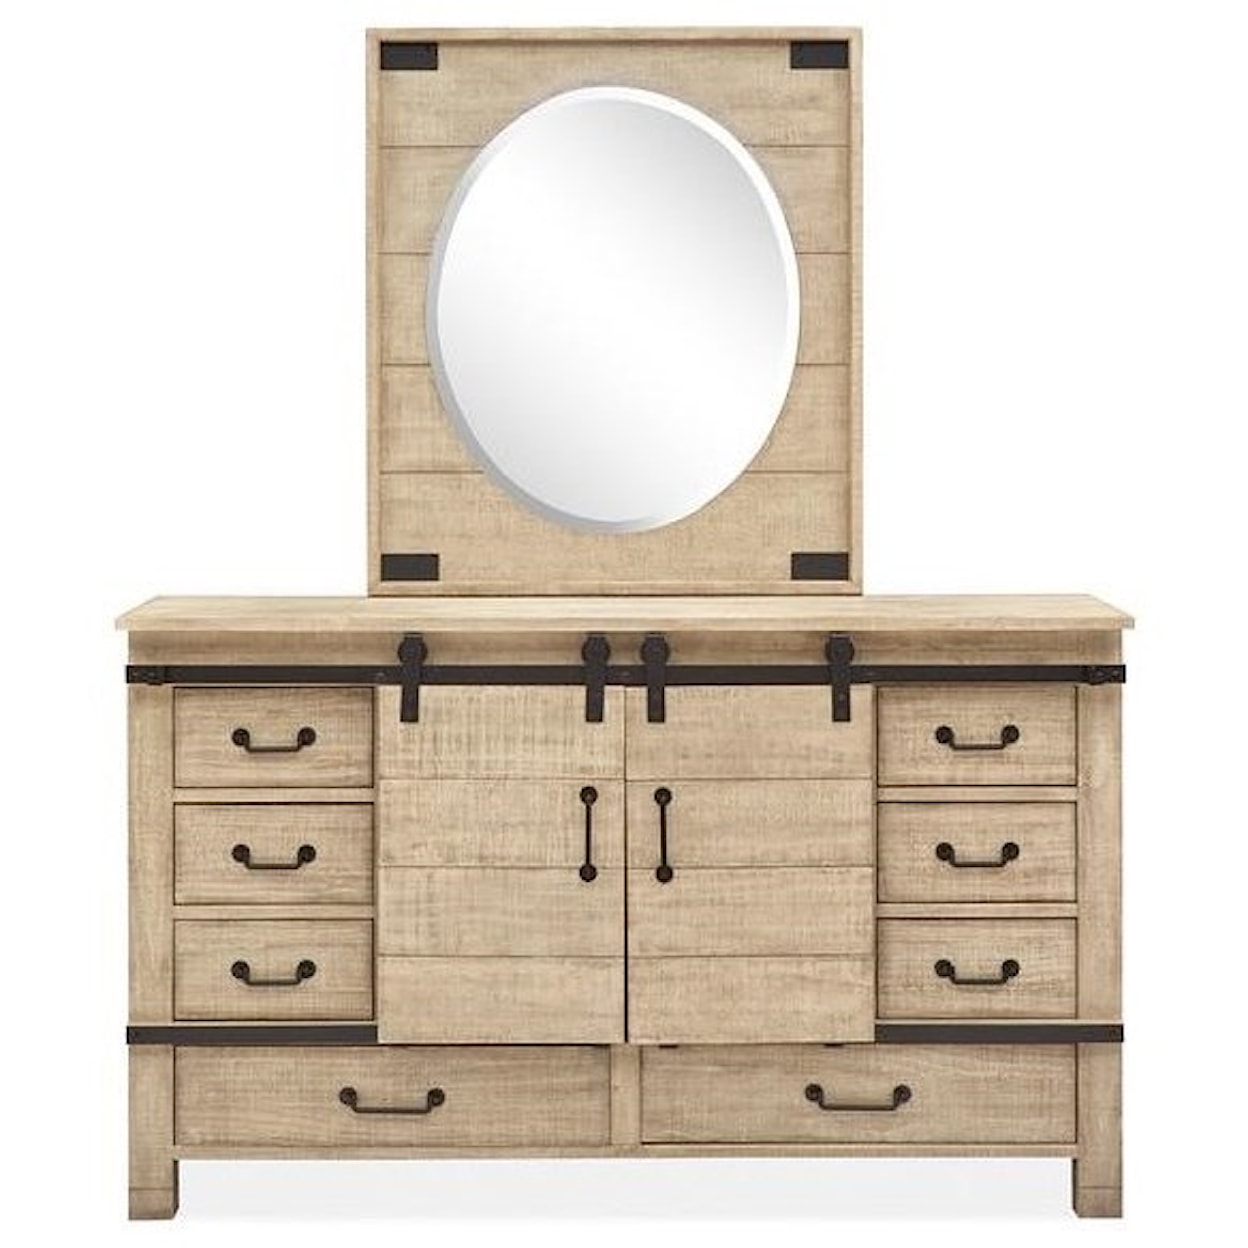 Magnussen Home Radcliffe Bedroom Portrait Oval Mirror